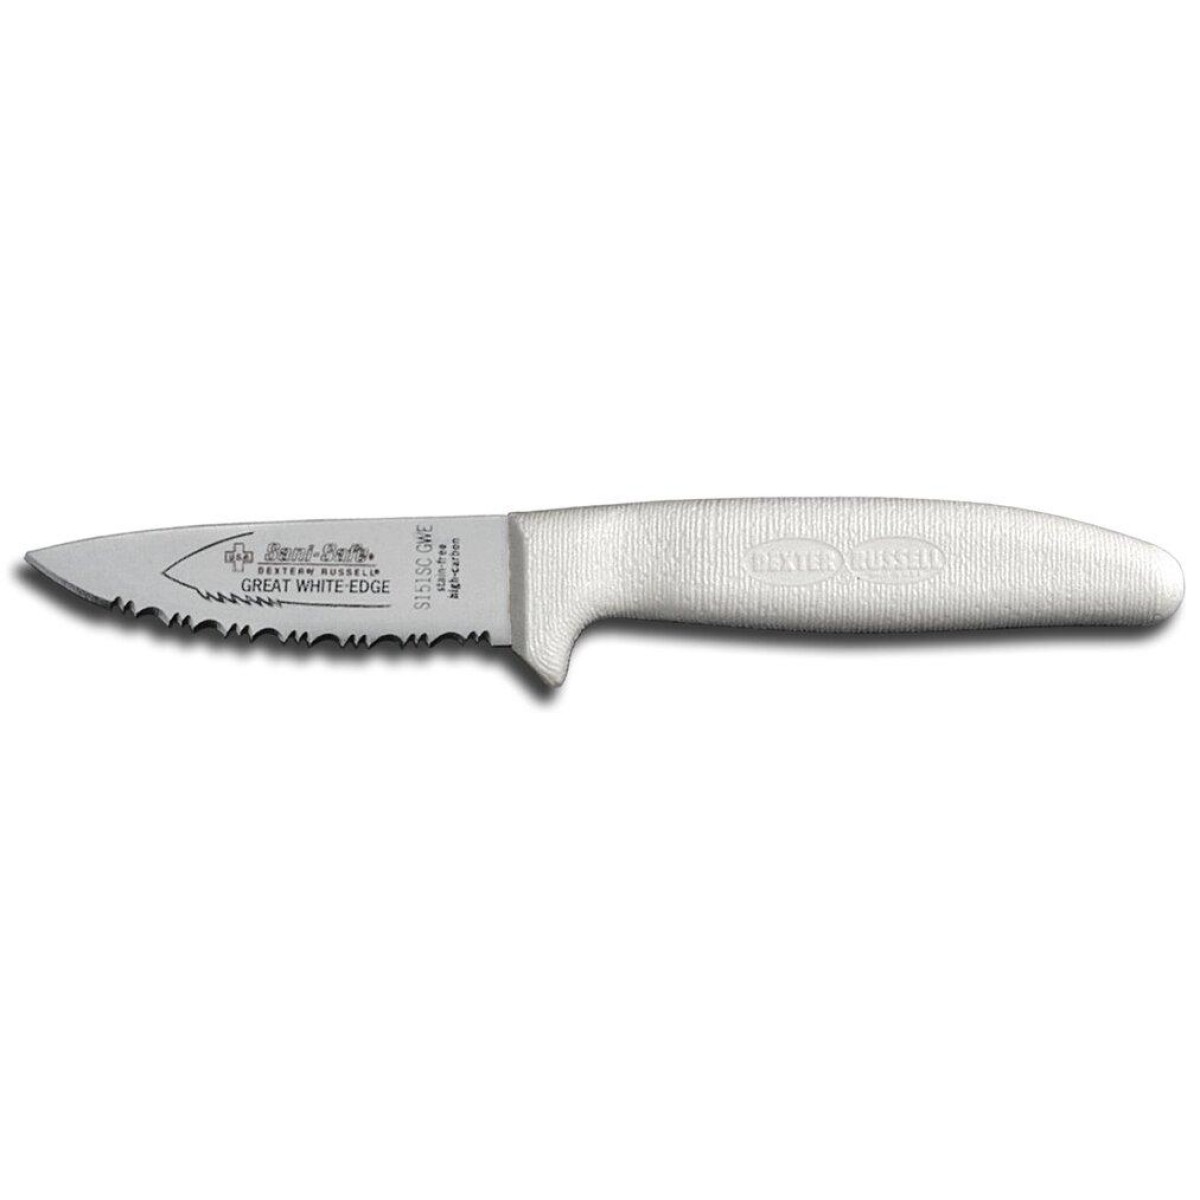 KNIFE SANI-SAFE NET 9CM GREAT WHITE EDGE